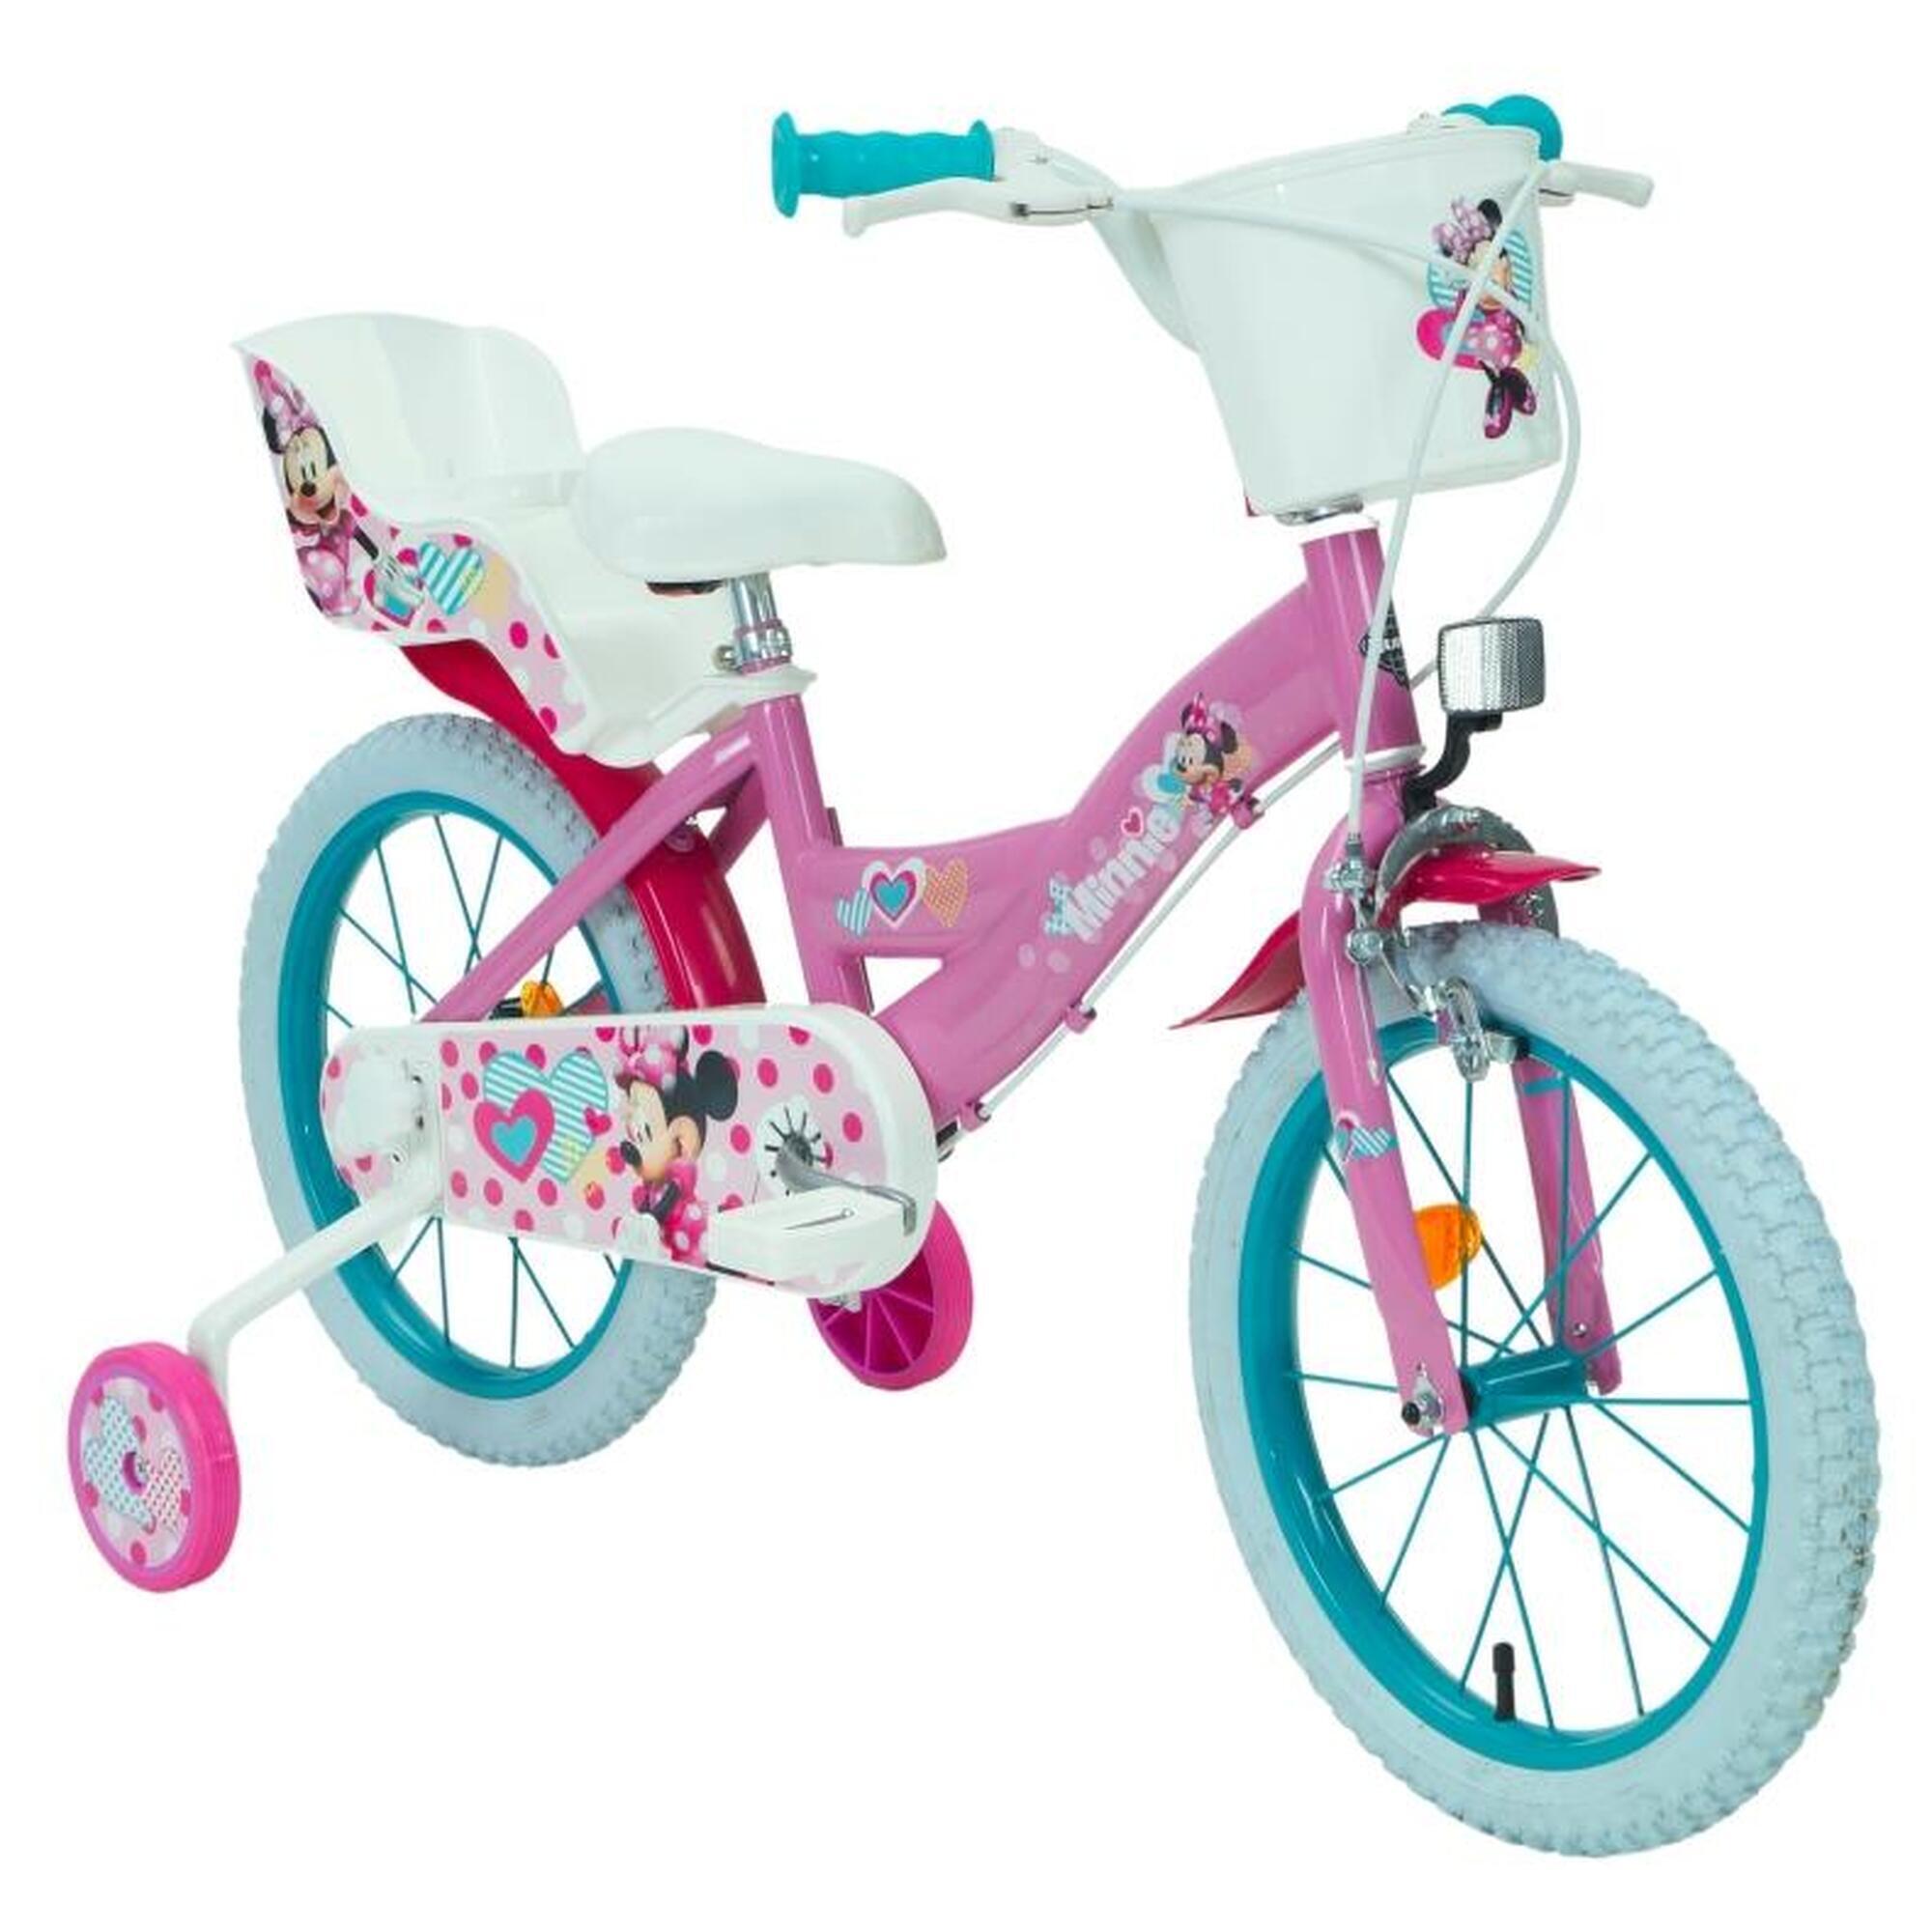 Huffy Disney Minnie Mouse 16 Kids Bike - Pink/Blue HUFFY